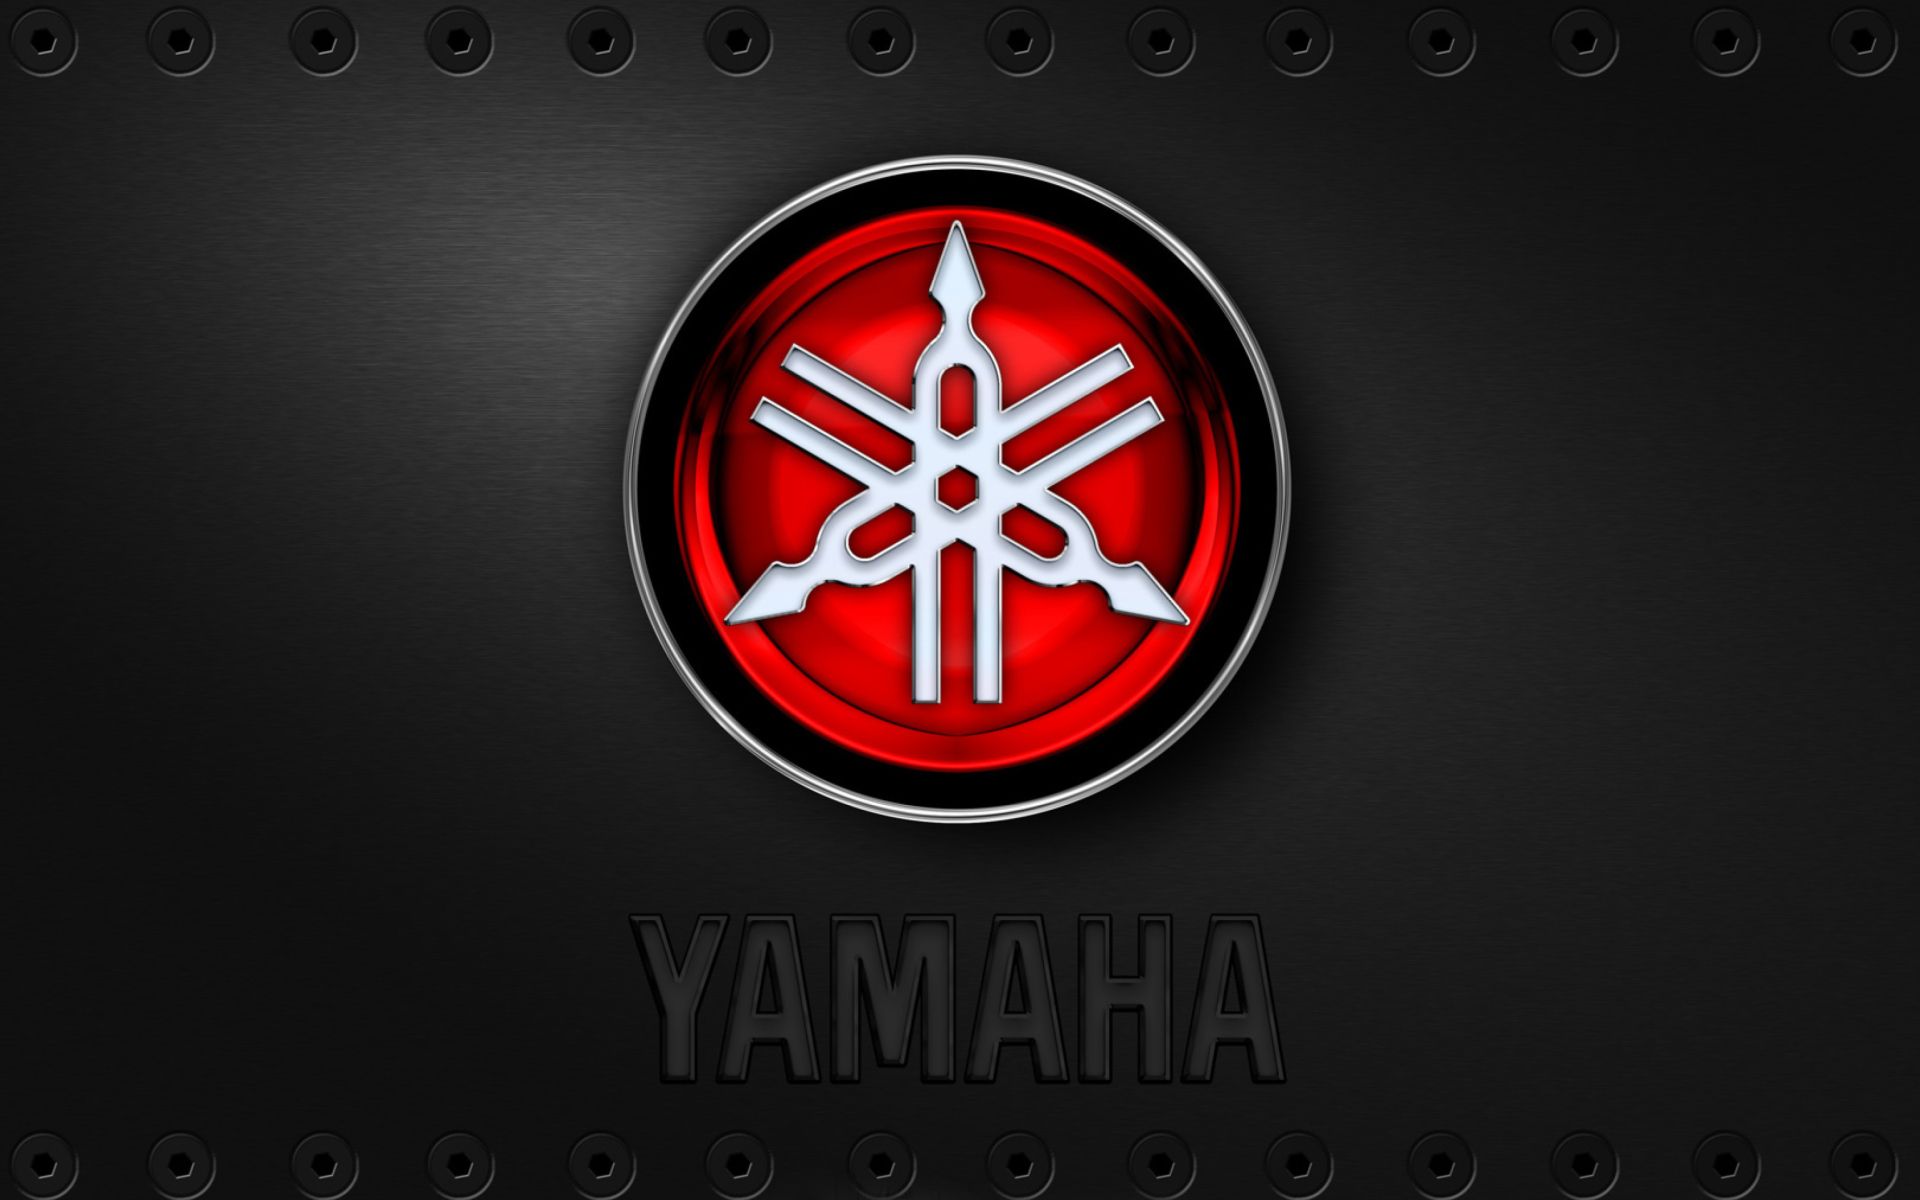 Yamaha black red yamaha logo blue camaro logo wallpaper hd